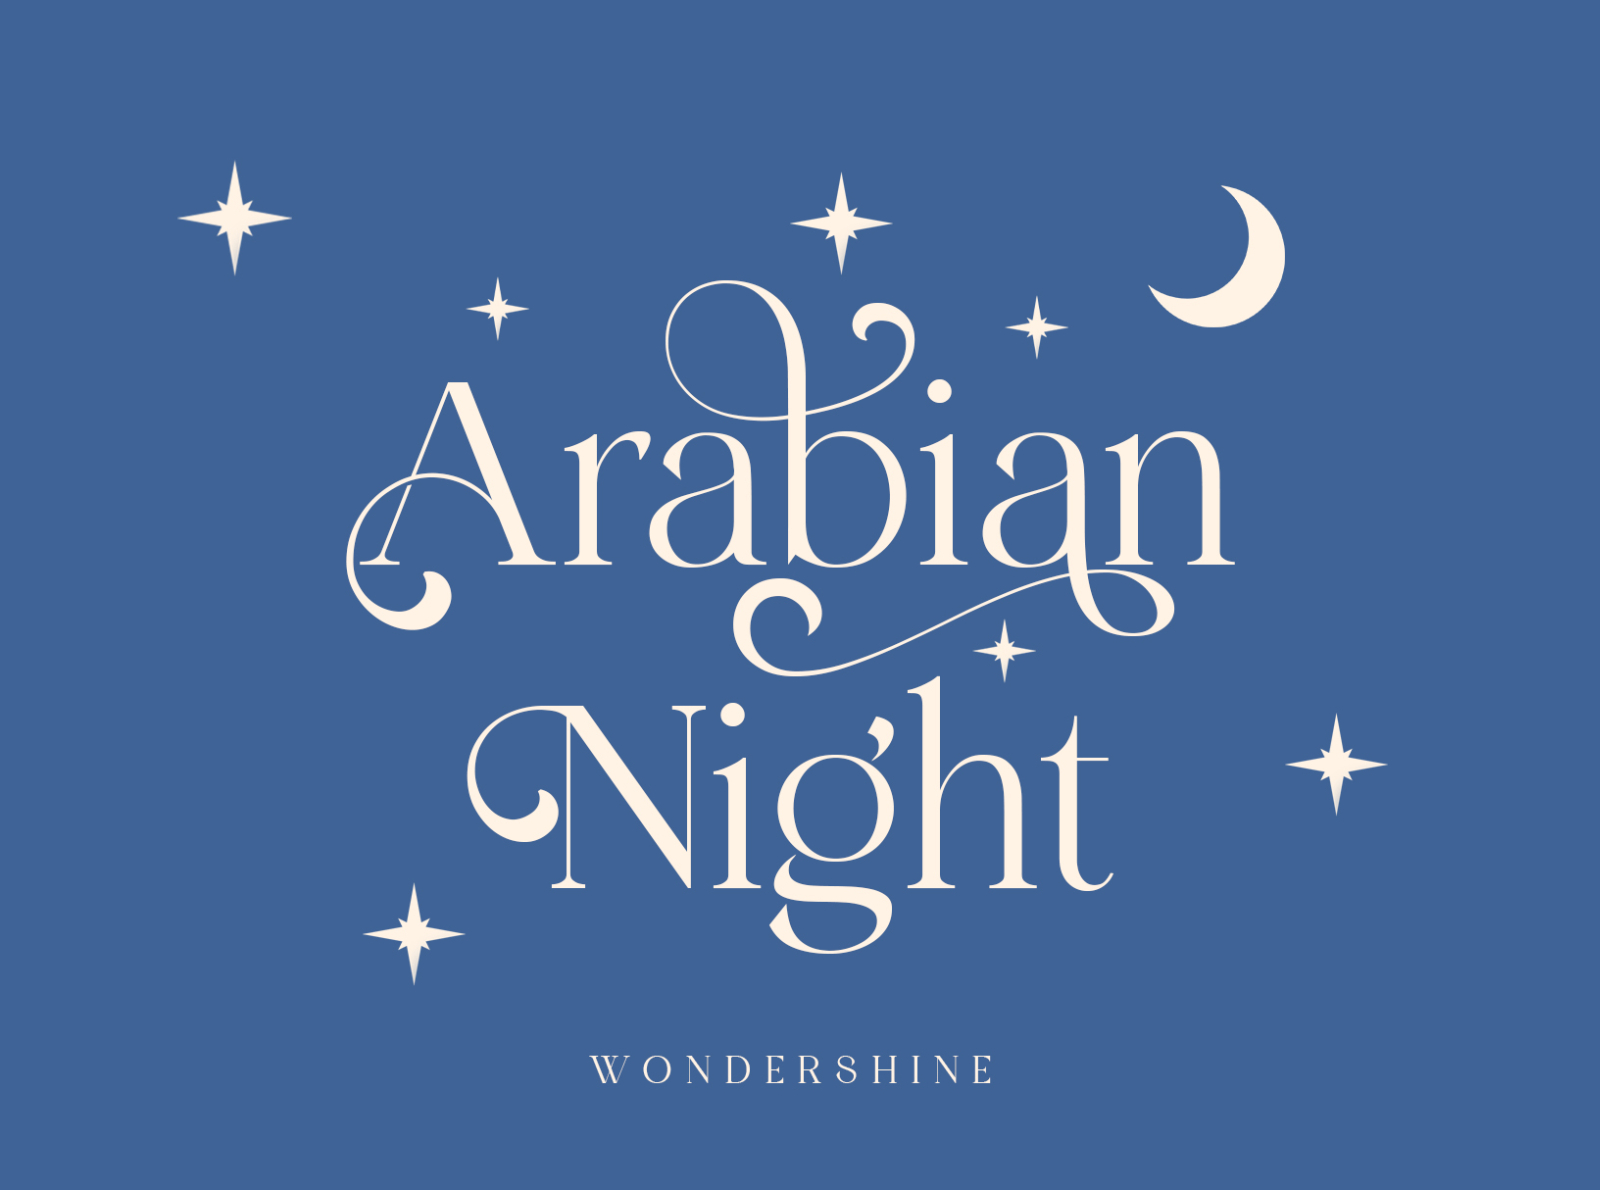 Arabian Night - wondershine elegant font by handpik on Dribbble